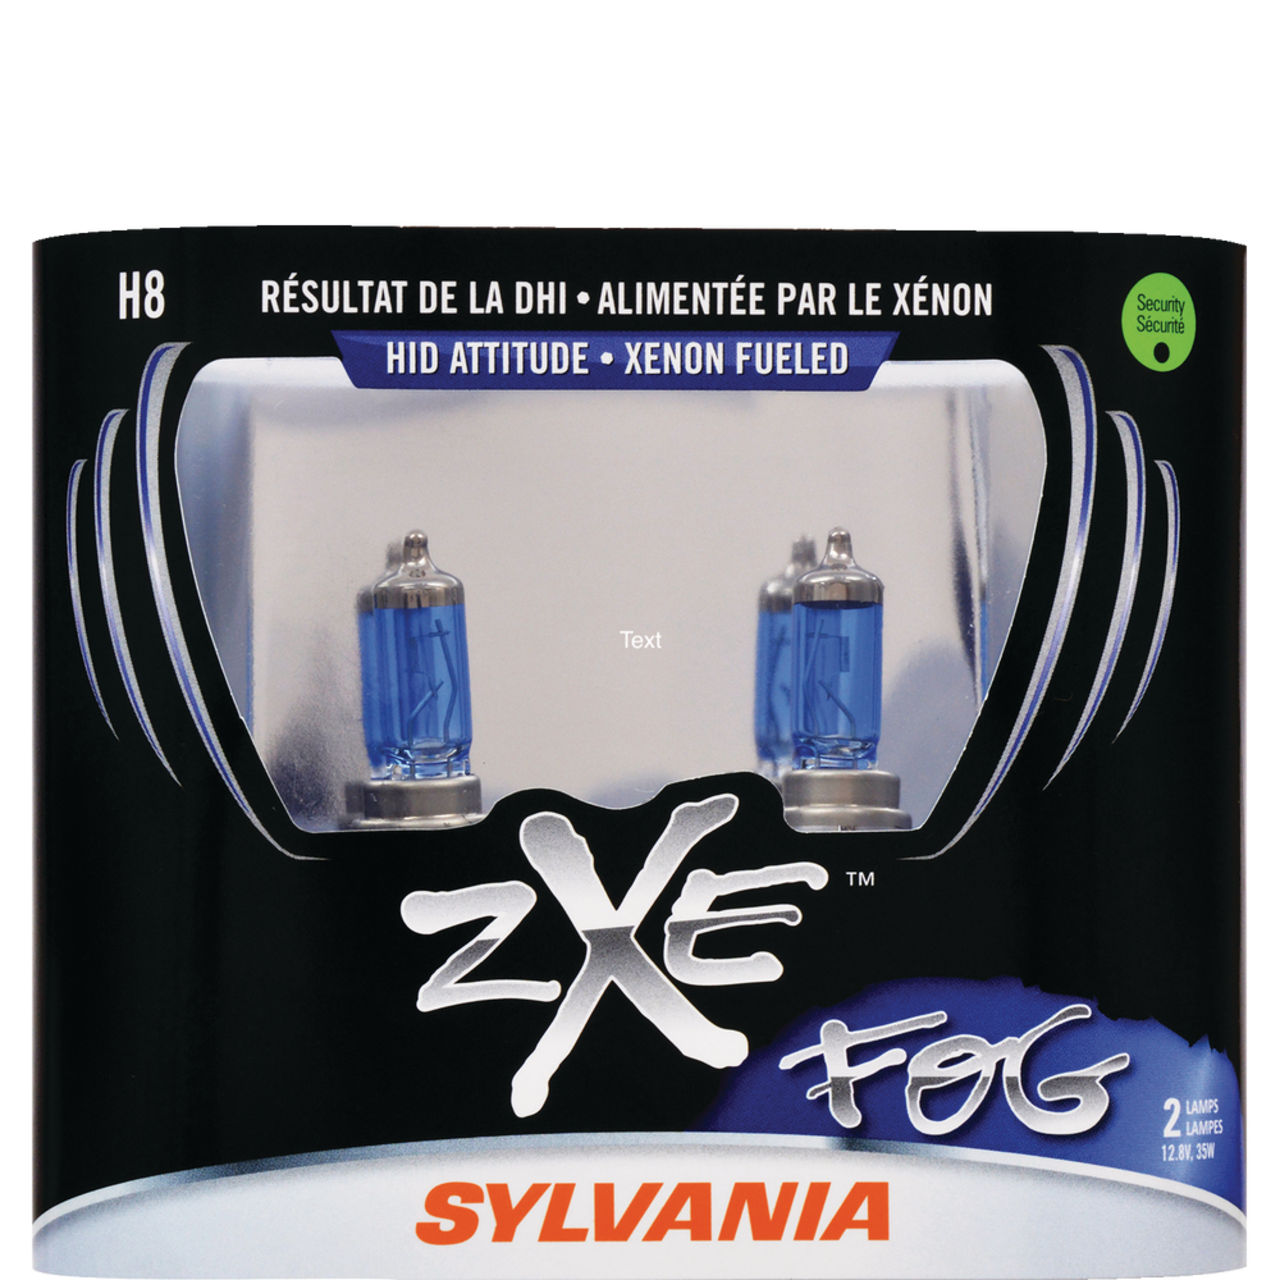 H8 Sylvania SilverStar® zXe Fog Light Bulb, 2-pk